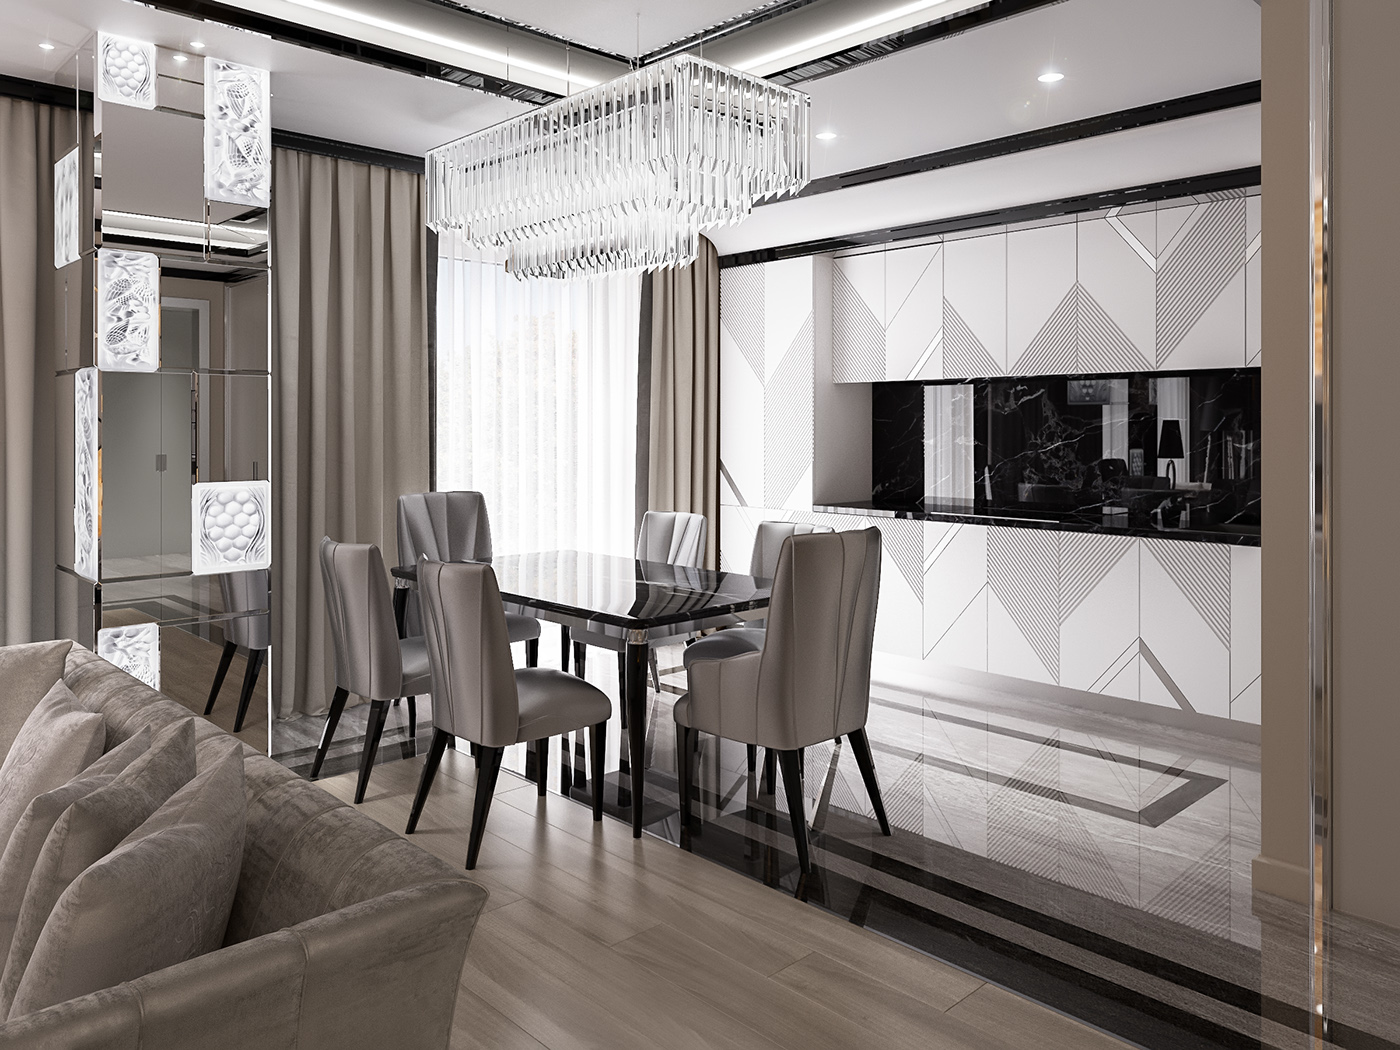 Visionnaire apartment Interior design eclecticism luxury modern art deco visualization 3D